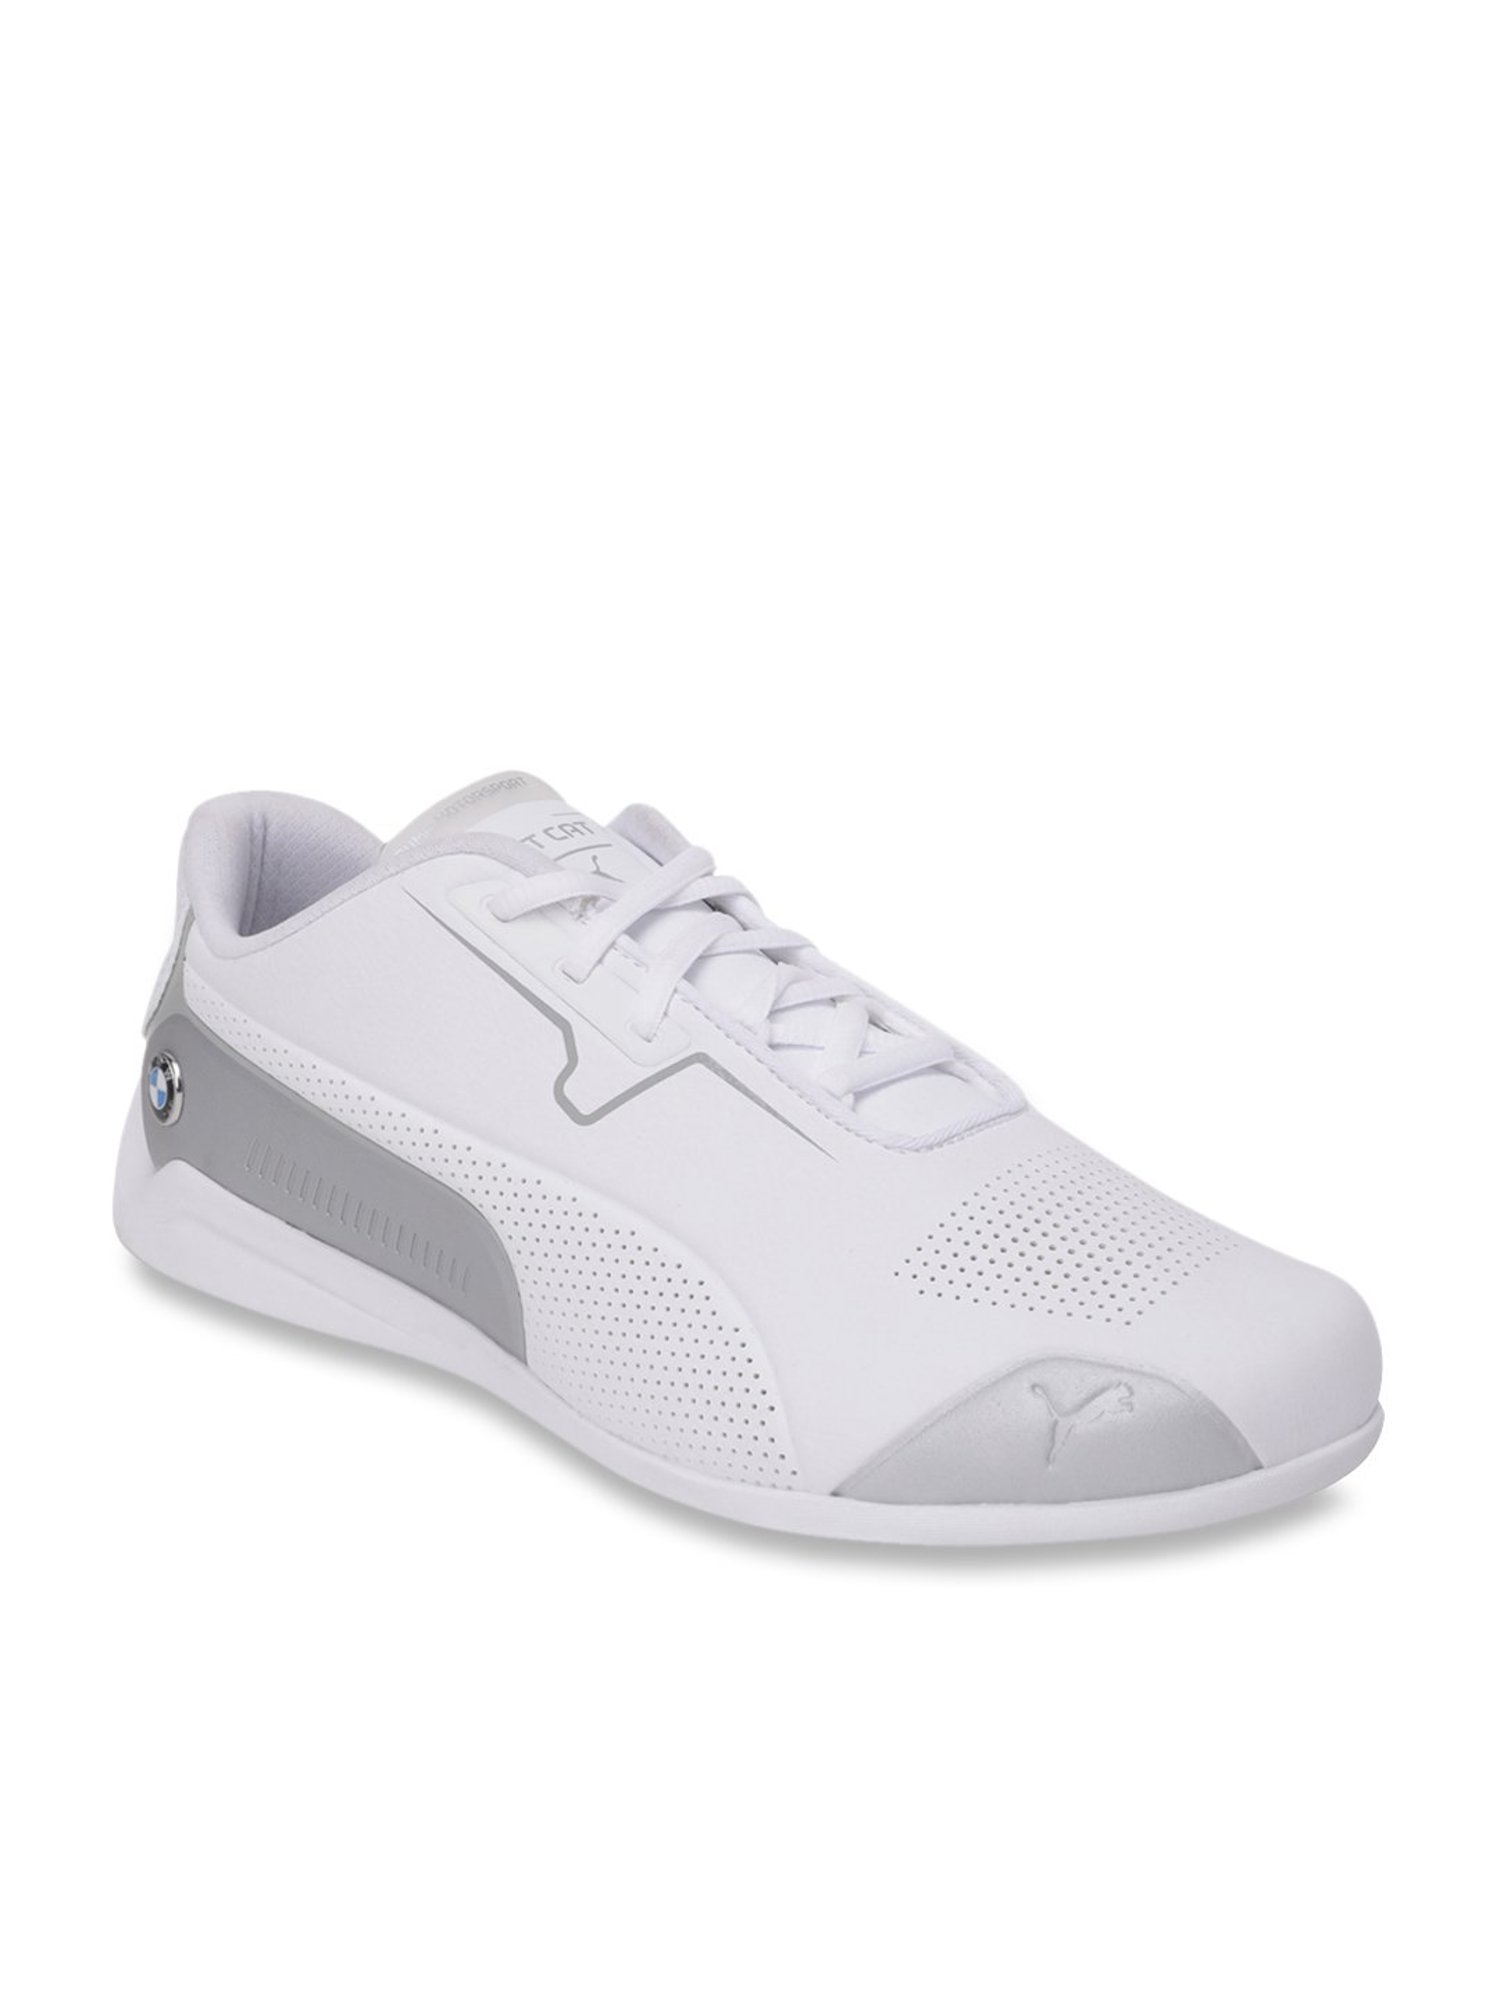 bmw white sneakers